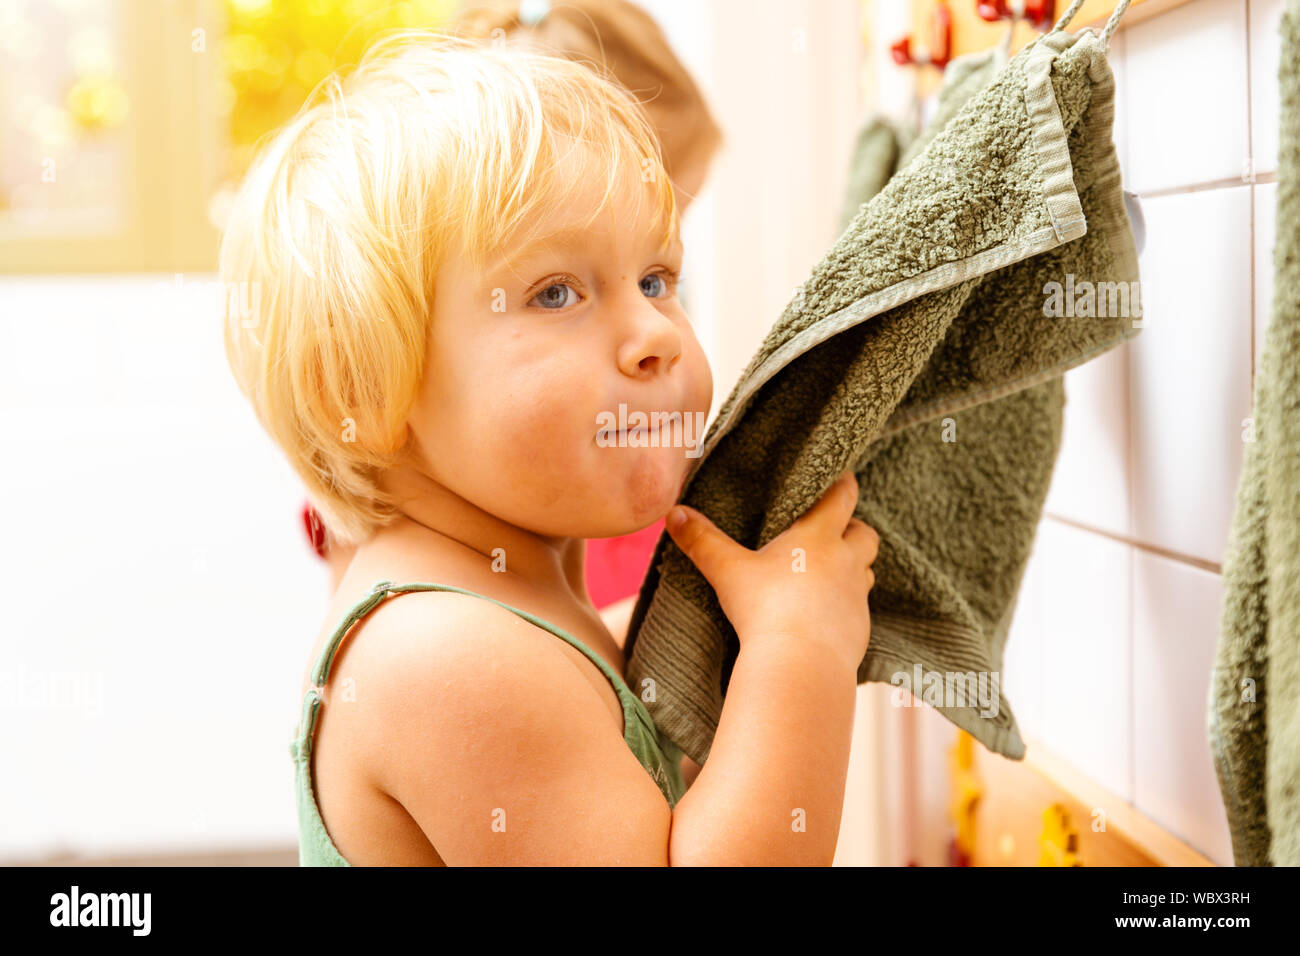 Little girl in nursery school using towel in bathroom Stock Photo